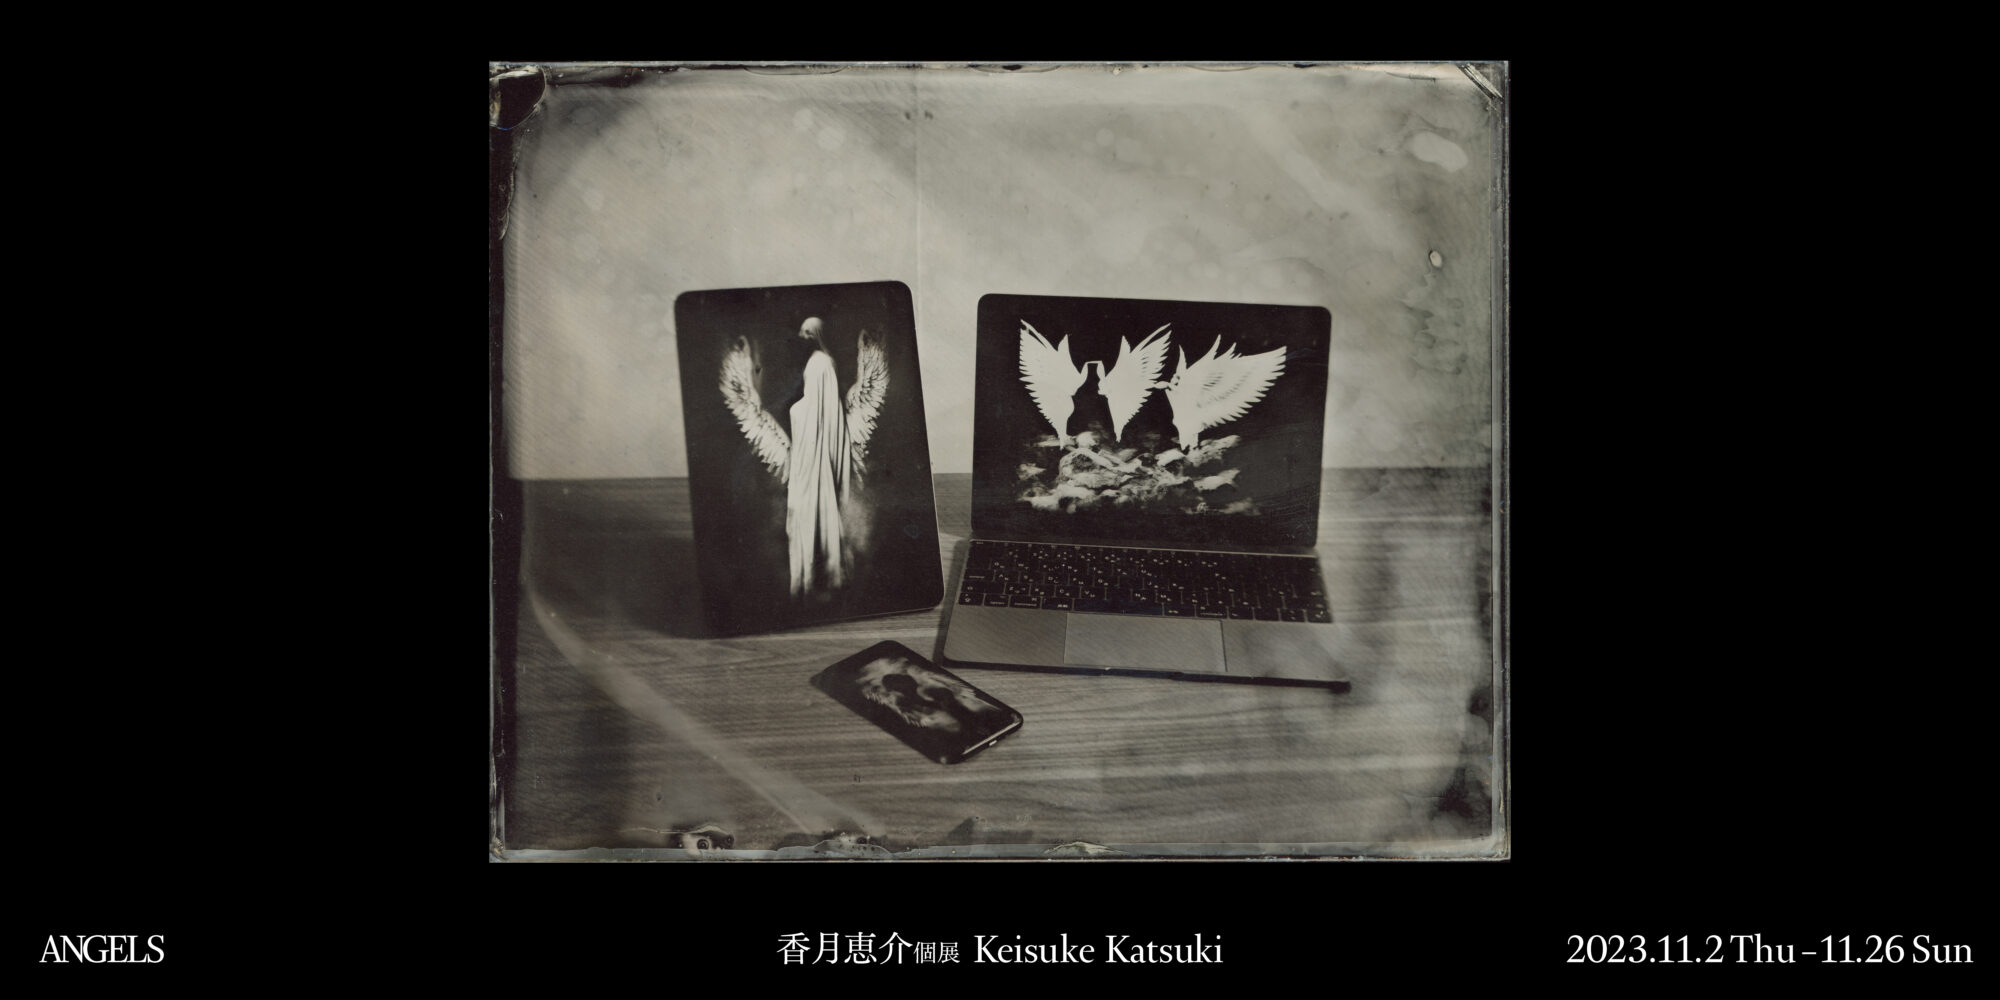 Keisuke Katsuki Solo Exhibition “ANGELS”